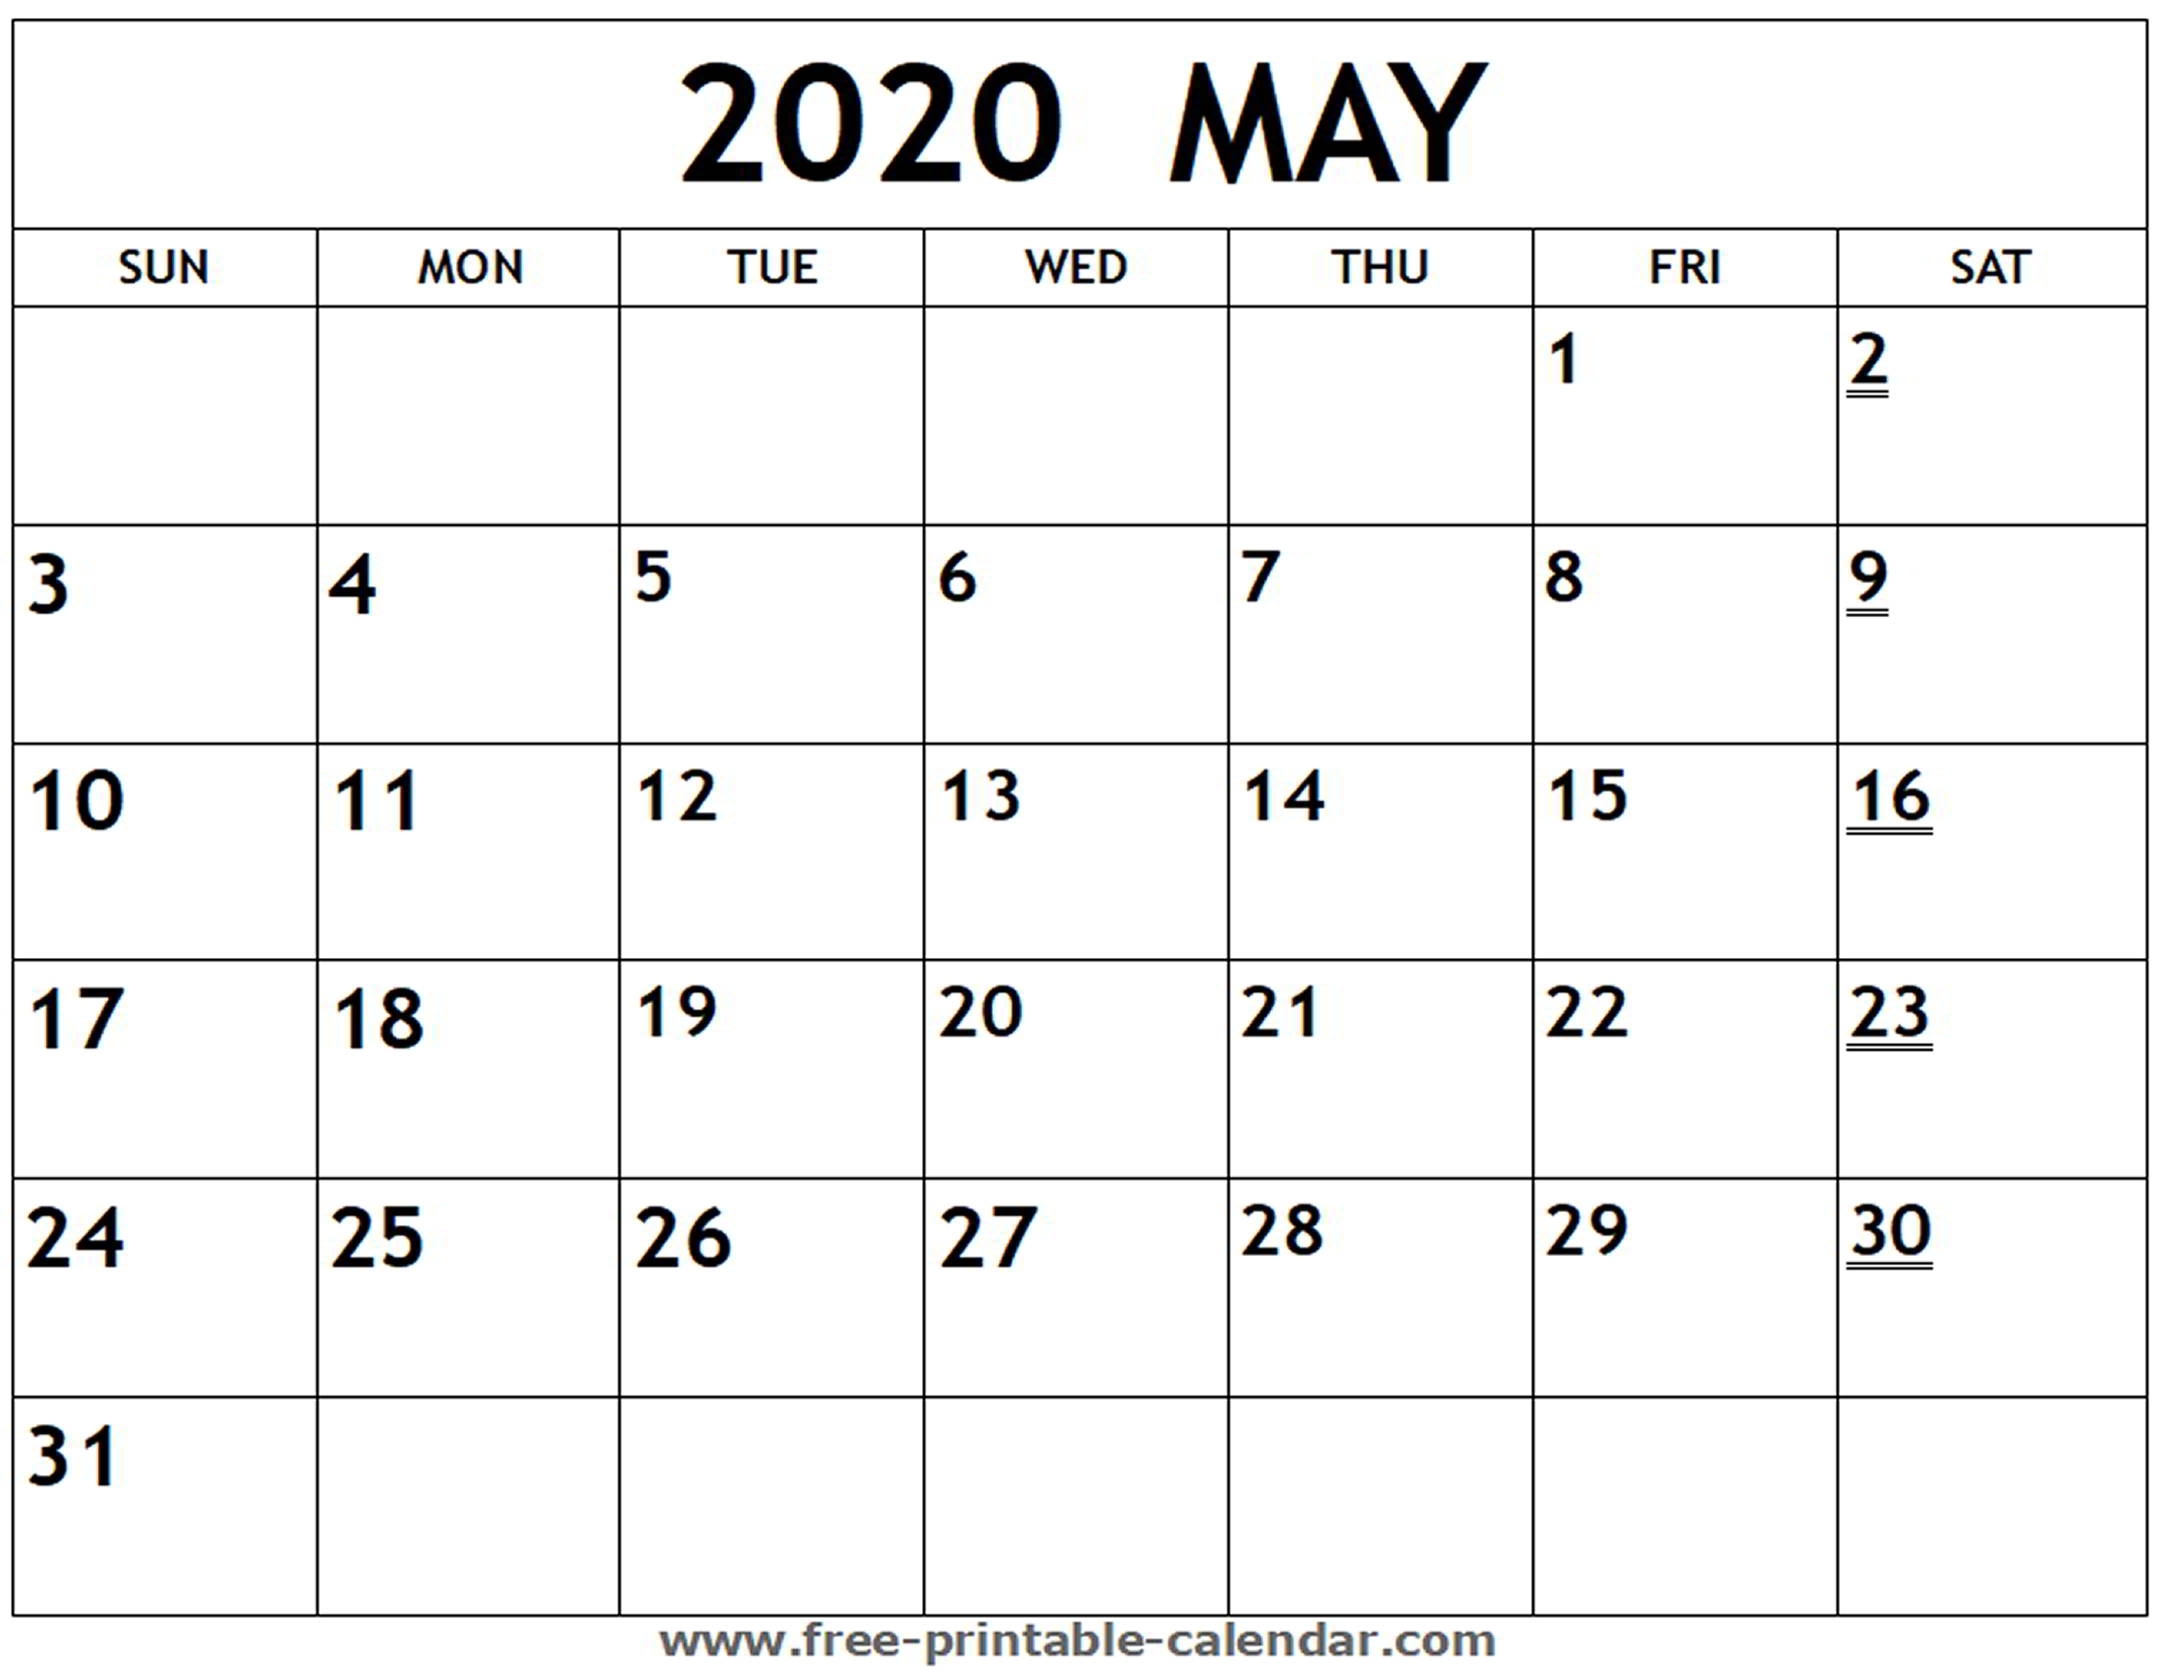 Printable 2020 May Calendar - Free-Printable-Calendar May 2020 Calendar Canada